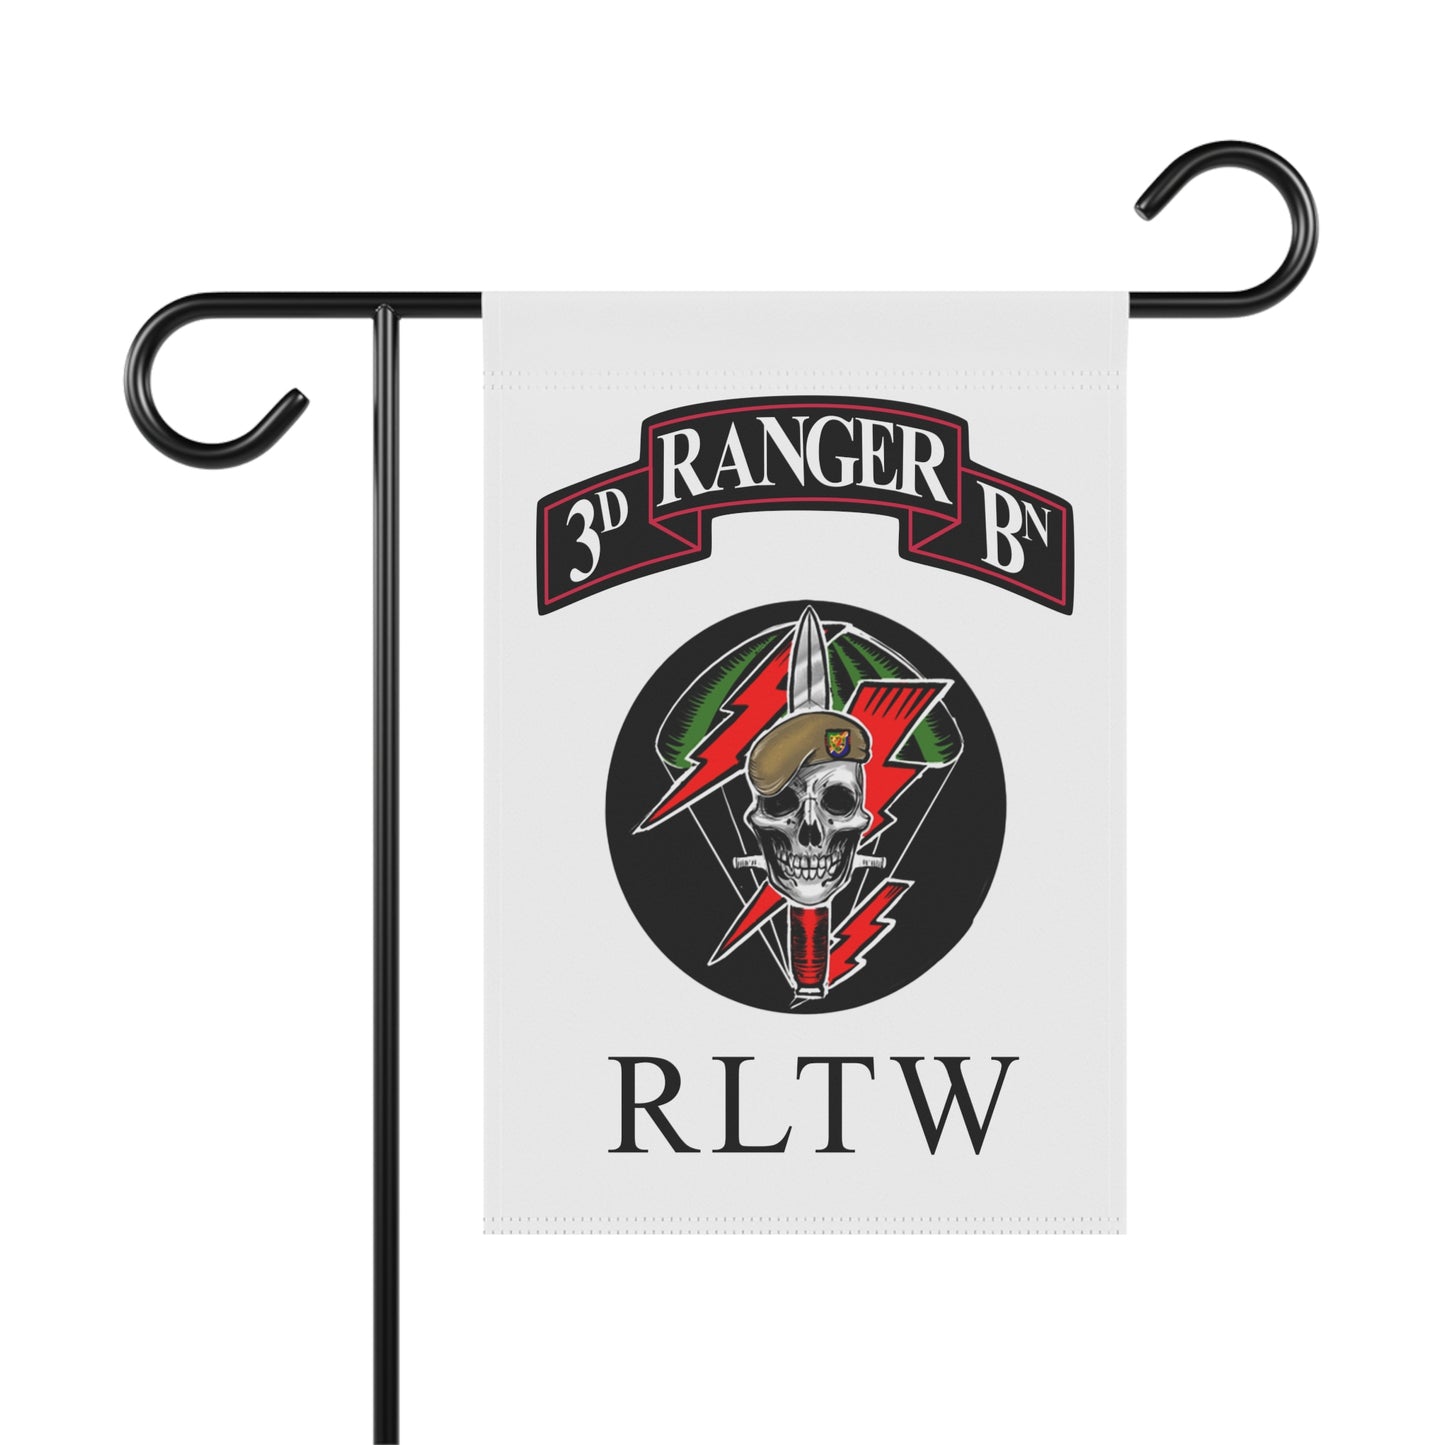 C Co, 3d Battalion RLTW Garden & House Banner